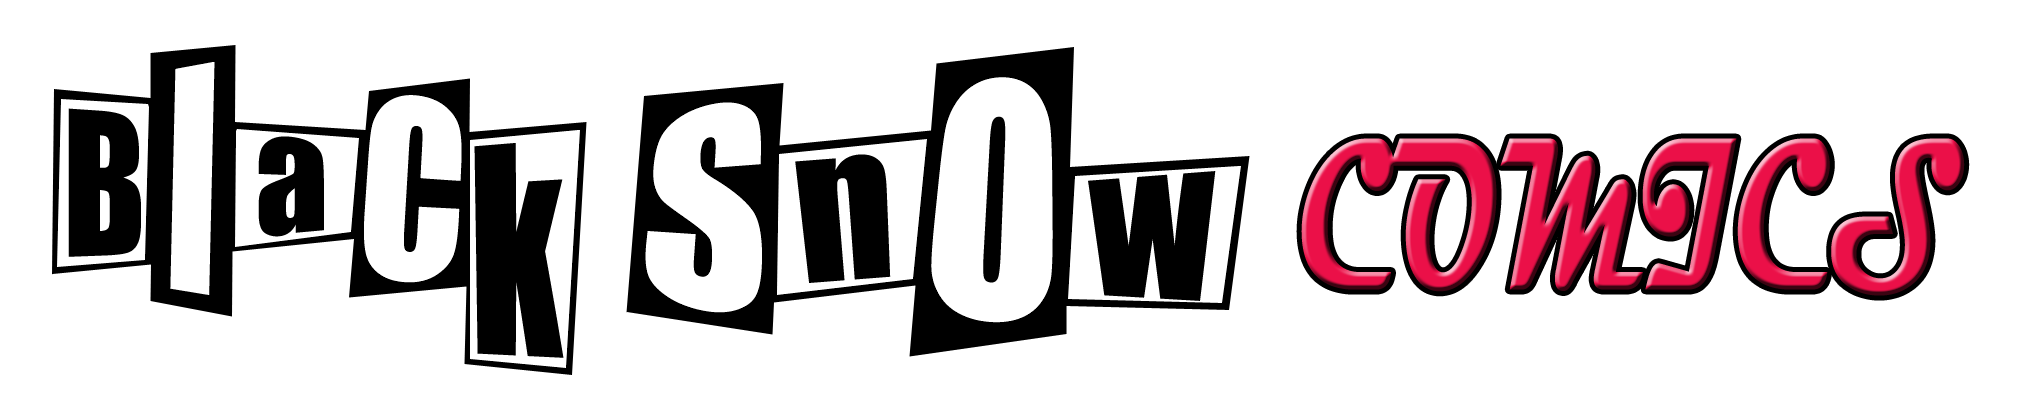 Black Snow Comics logo